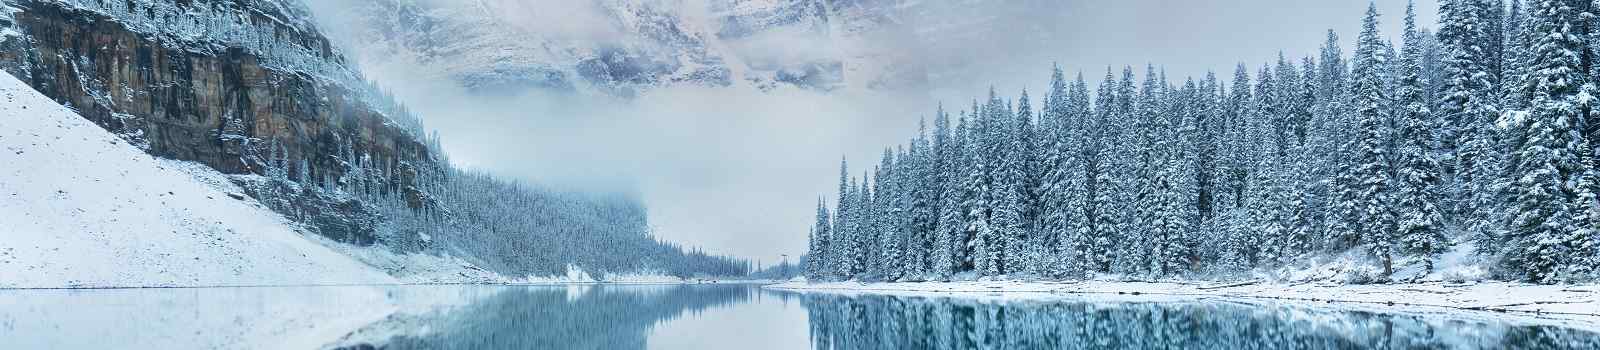 KL-CAD-KR-NL Moraine Lake in Banff National Park  1280341618